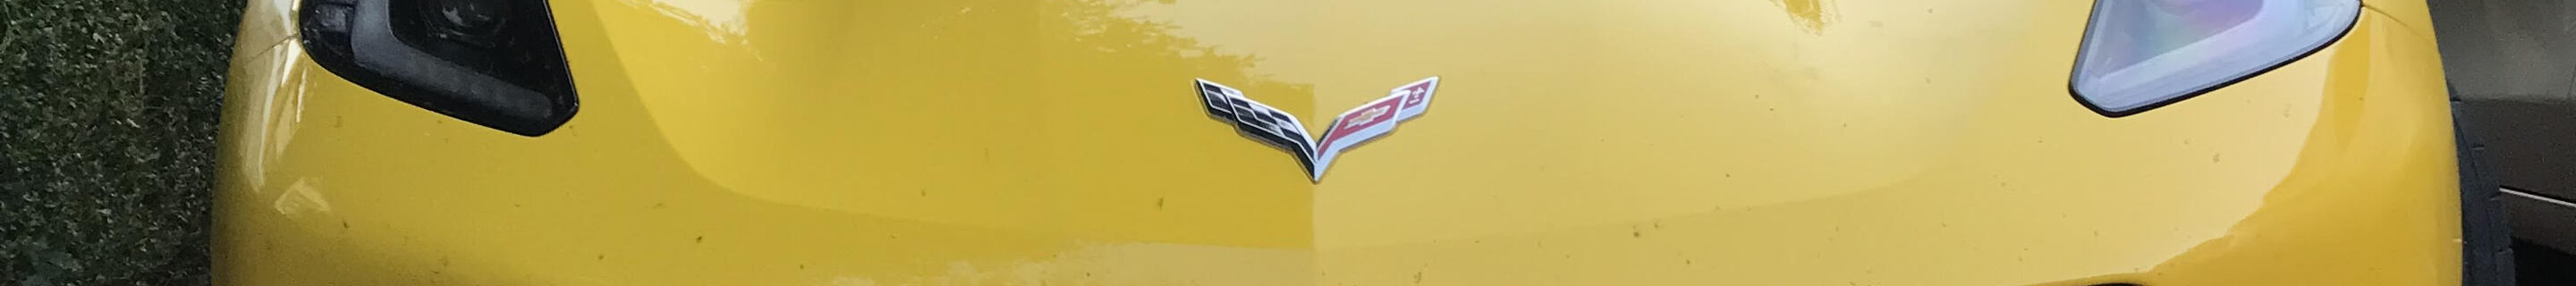 Chevrolet Corvette C7 Stingray Convertible